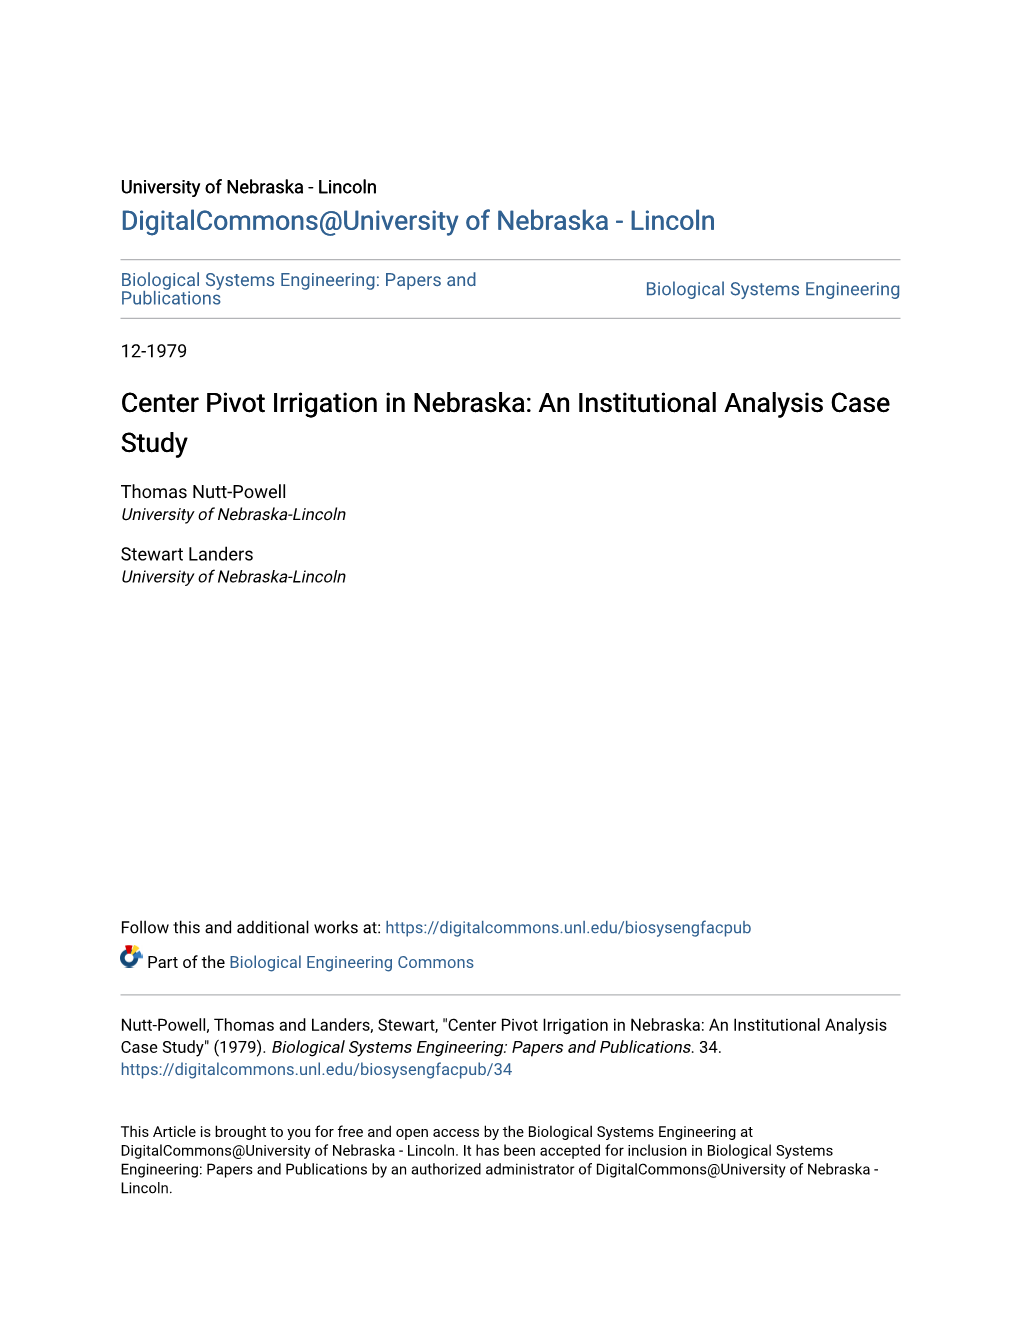 Center Pivot Irrigation in Nebraska: an Institutional Analysis Case Study